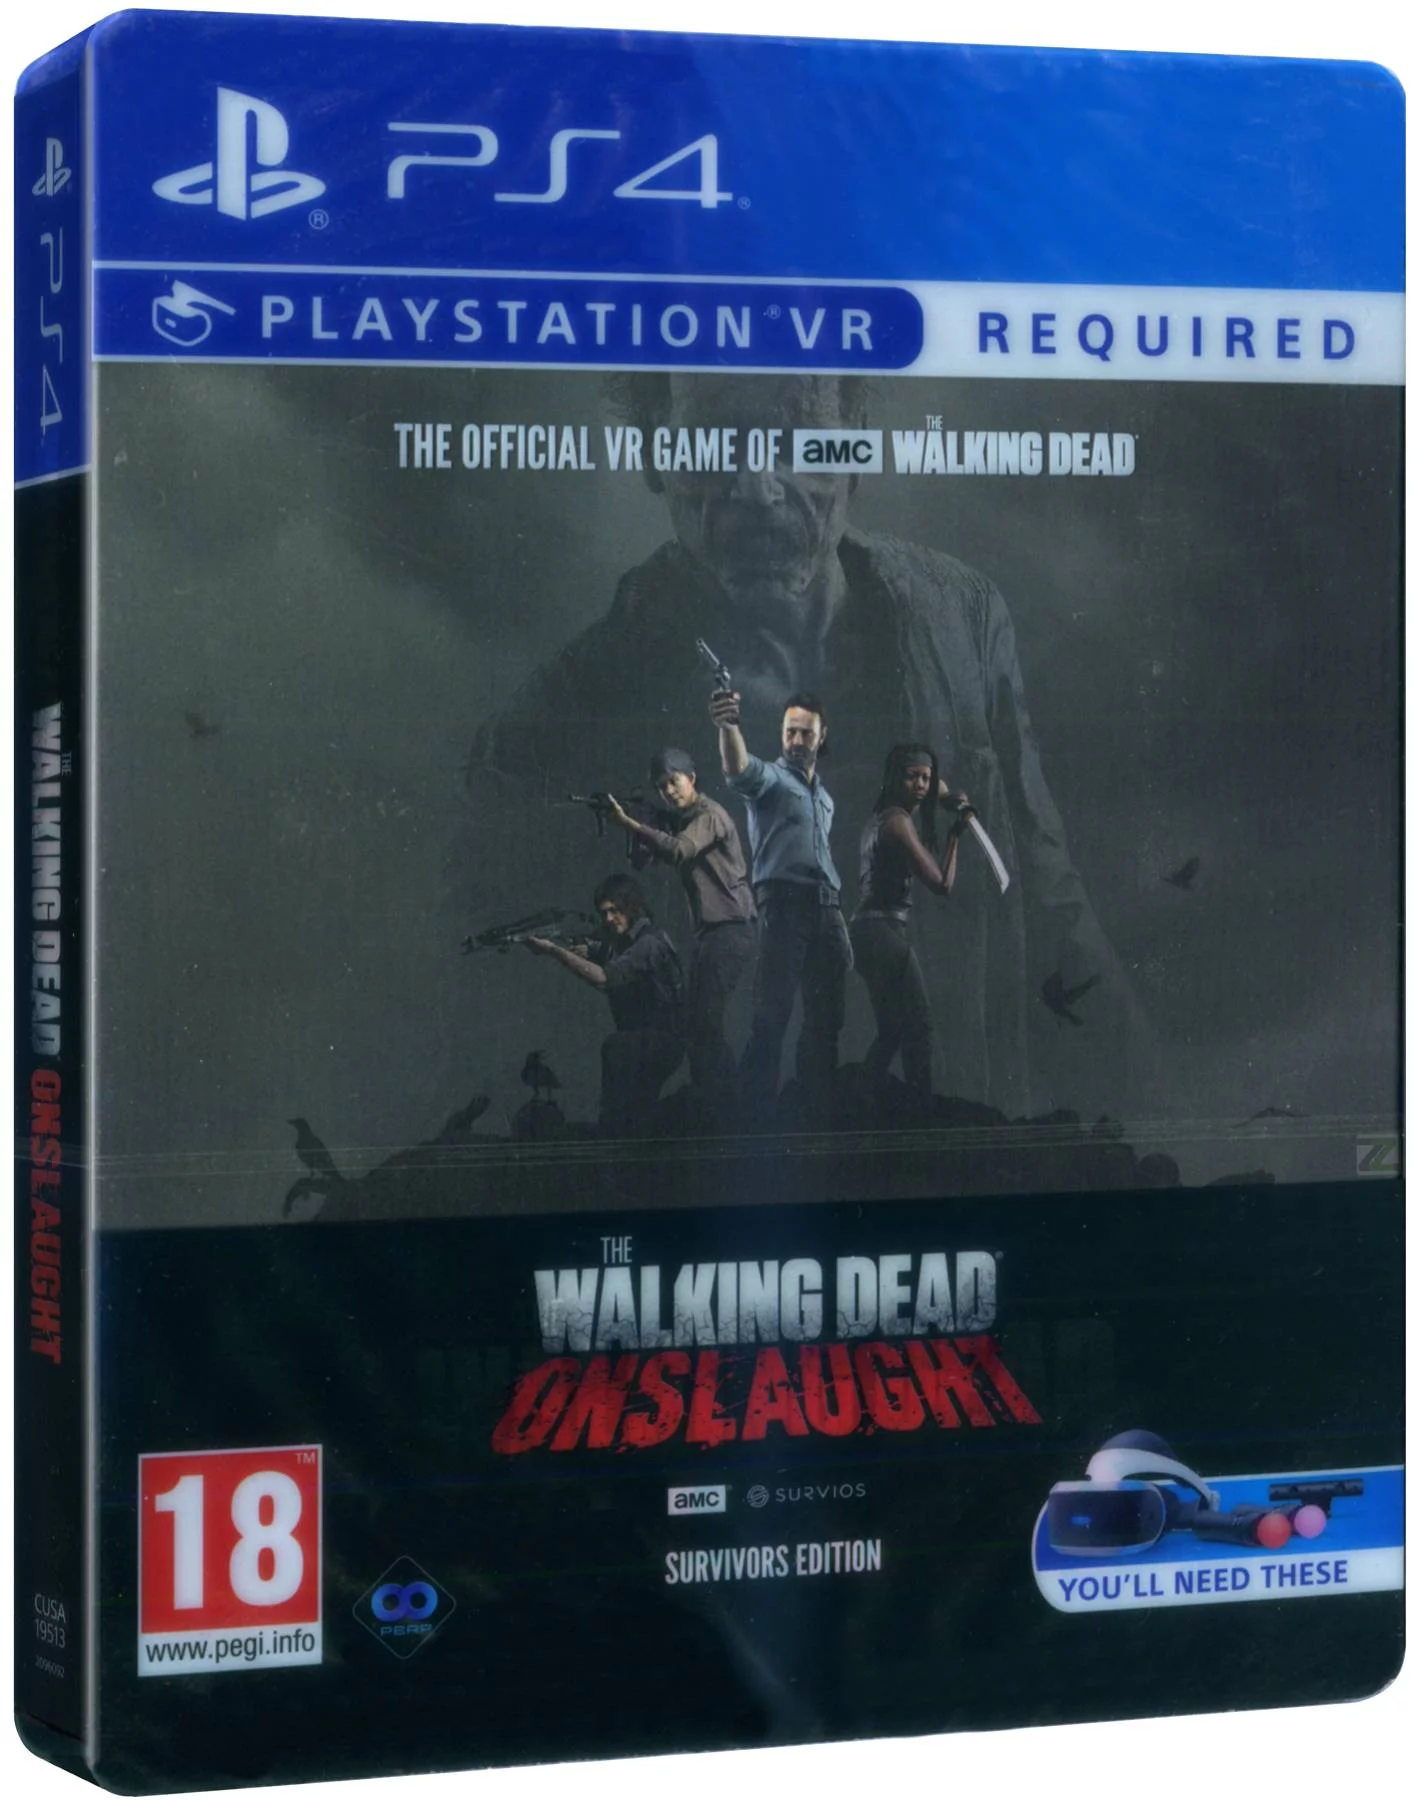 The Walking Dead Onslaught Steelbook Edition - PlayStation VR Játékok